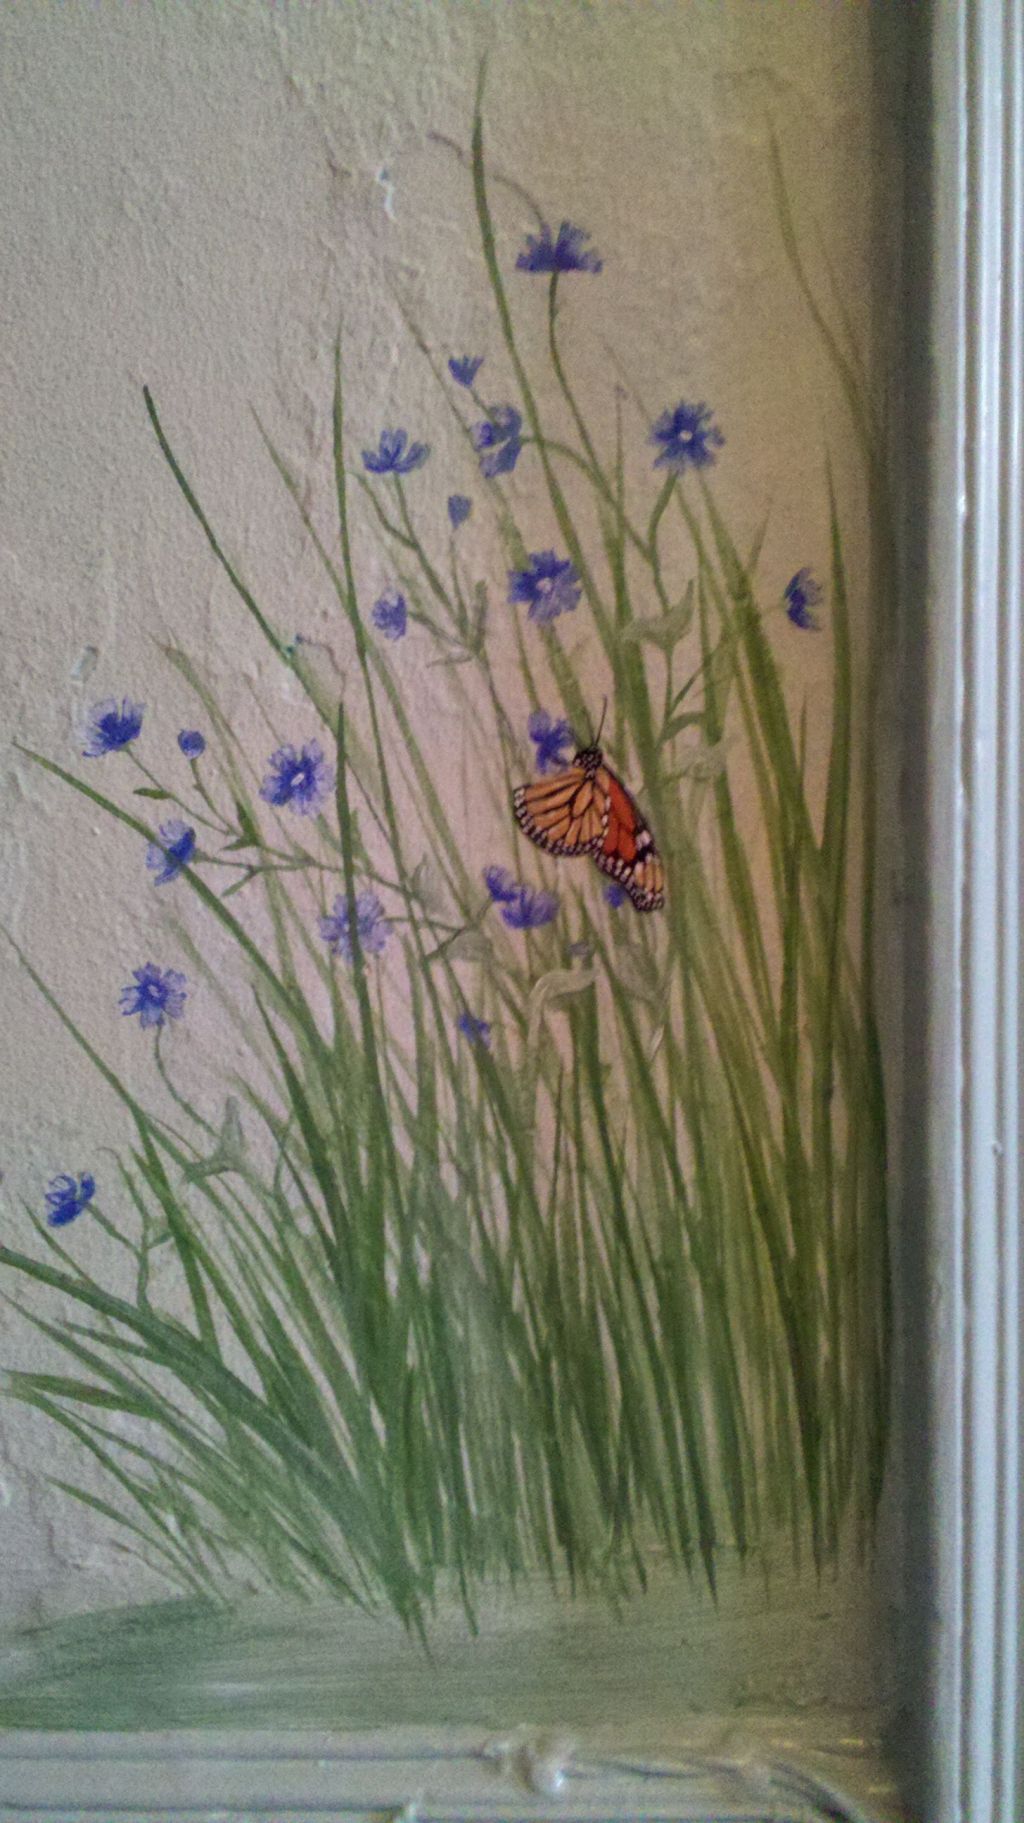 Butterfly Mural